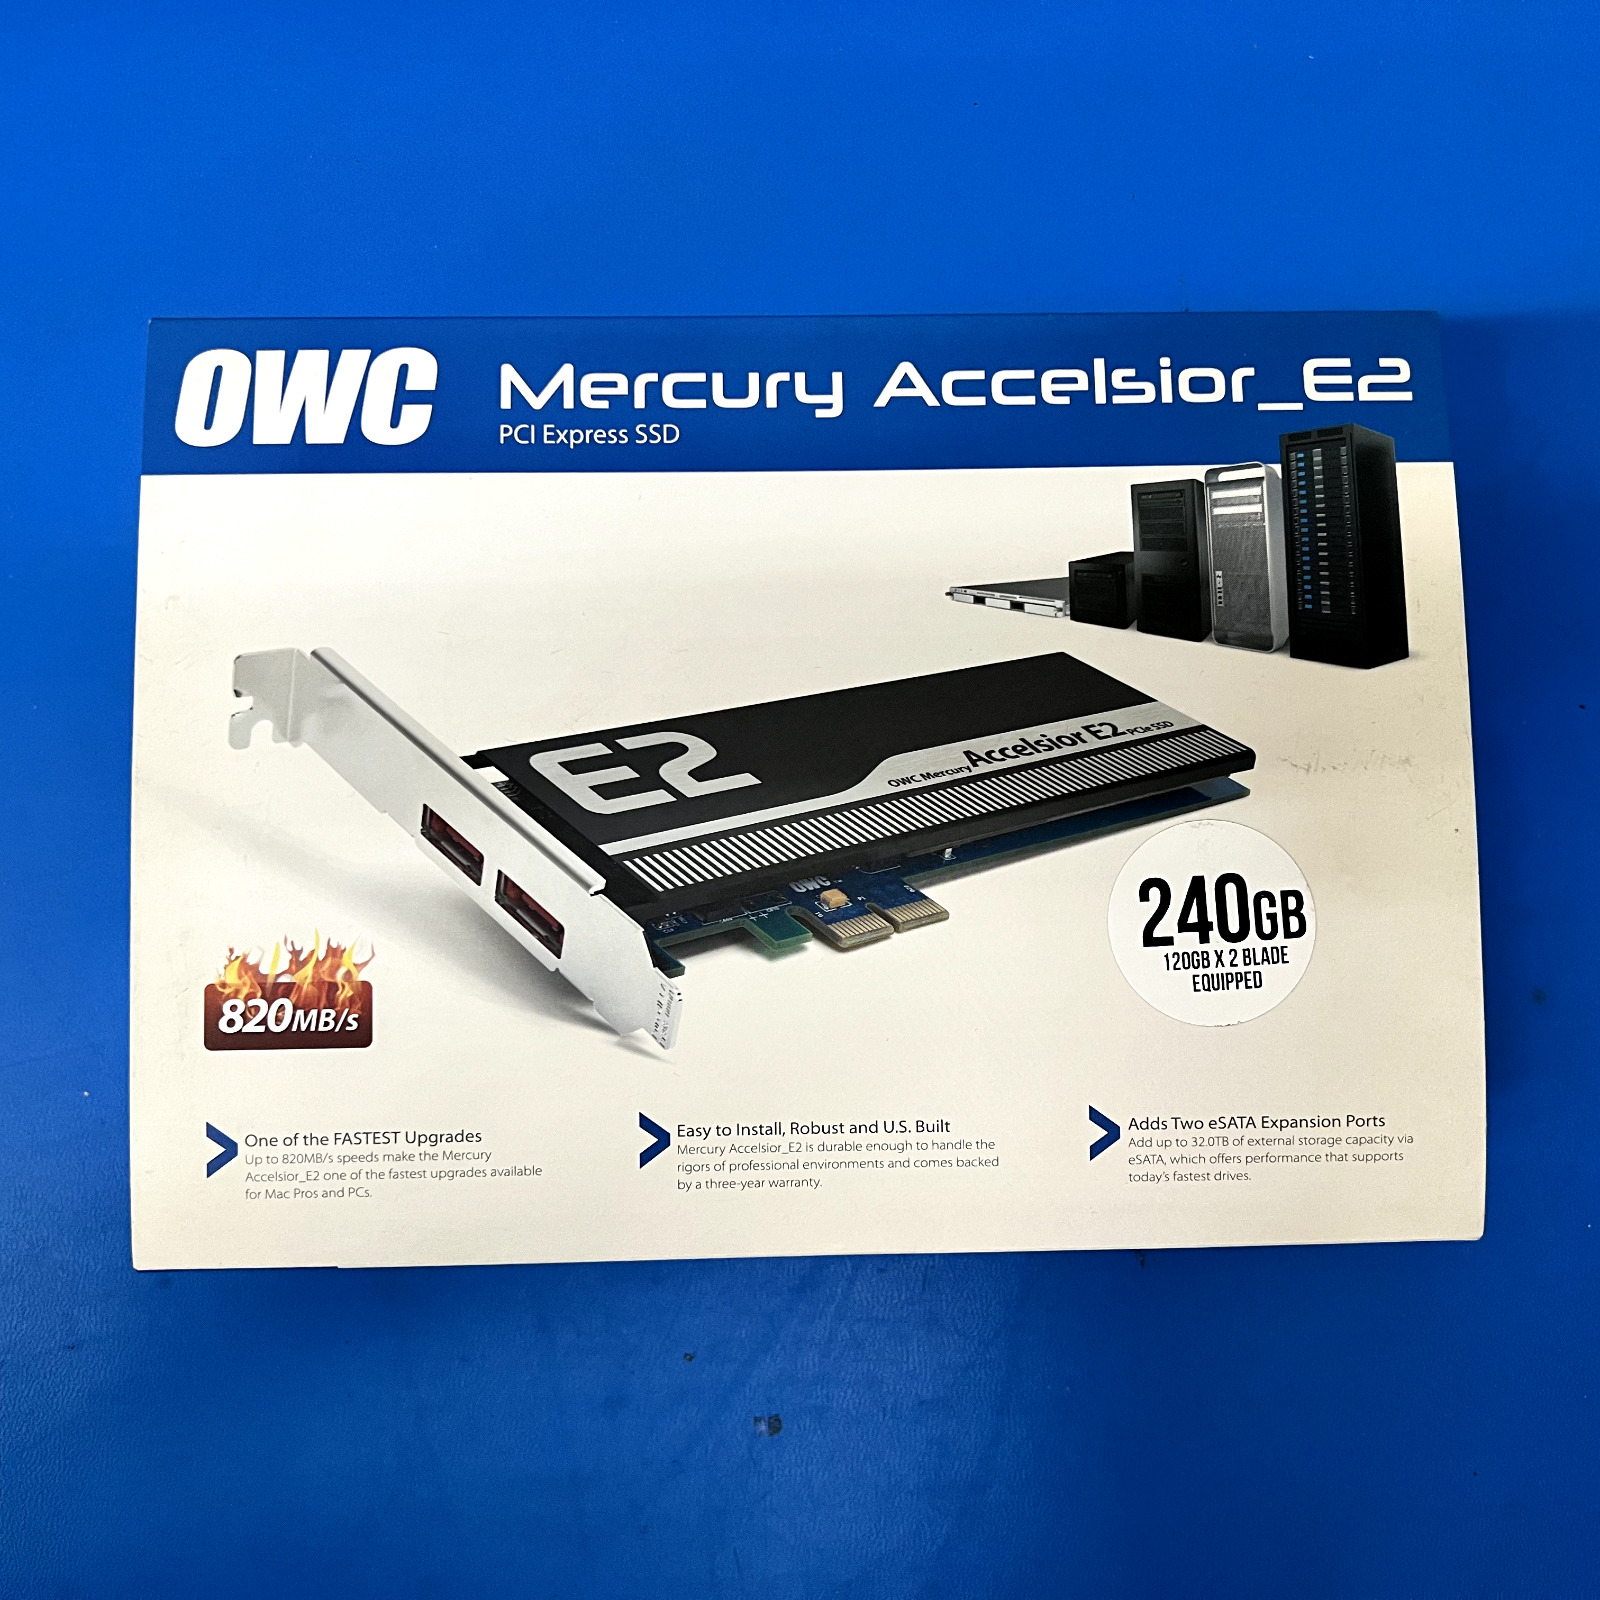 OWC Mercury Accelsior E2 PCIe 2.0 Express 240GB SSD eSATA - Mac Pro - TESTED